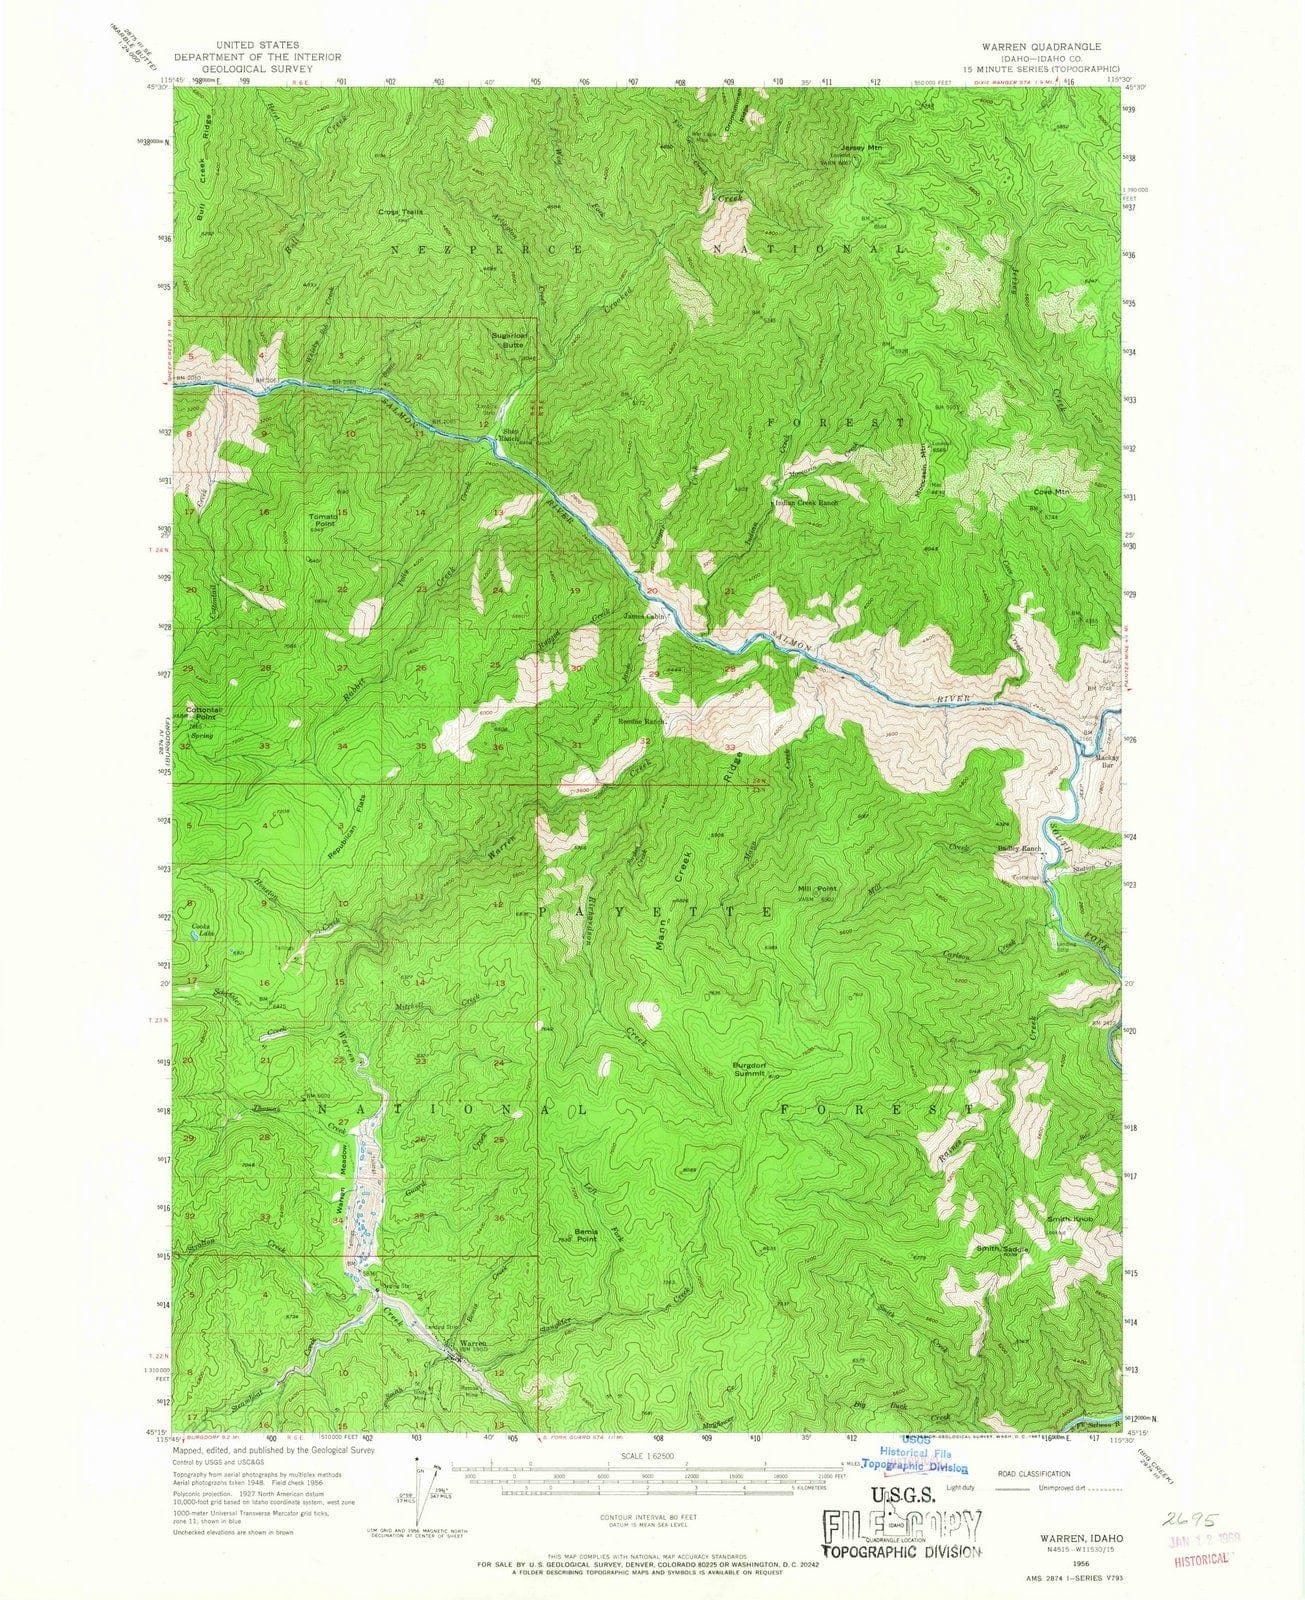 1956 Warren, ID - Idaho - USGS Topographic Map